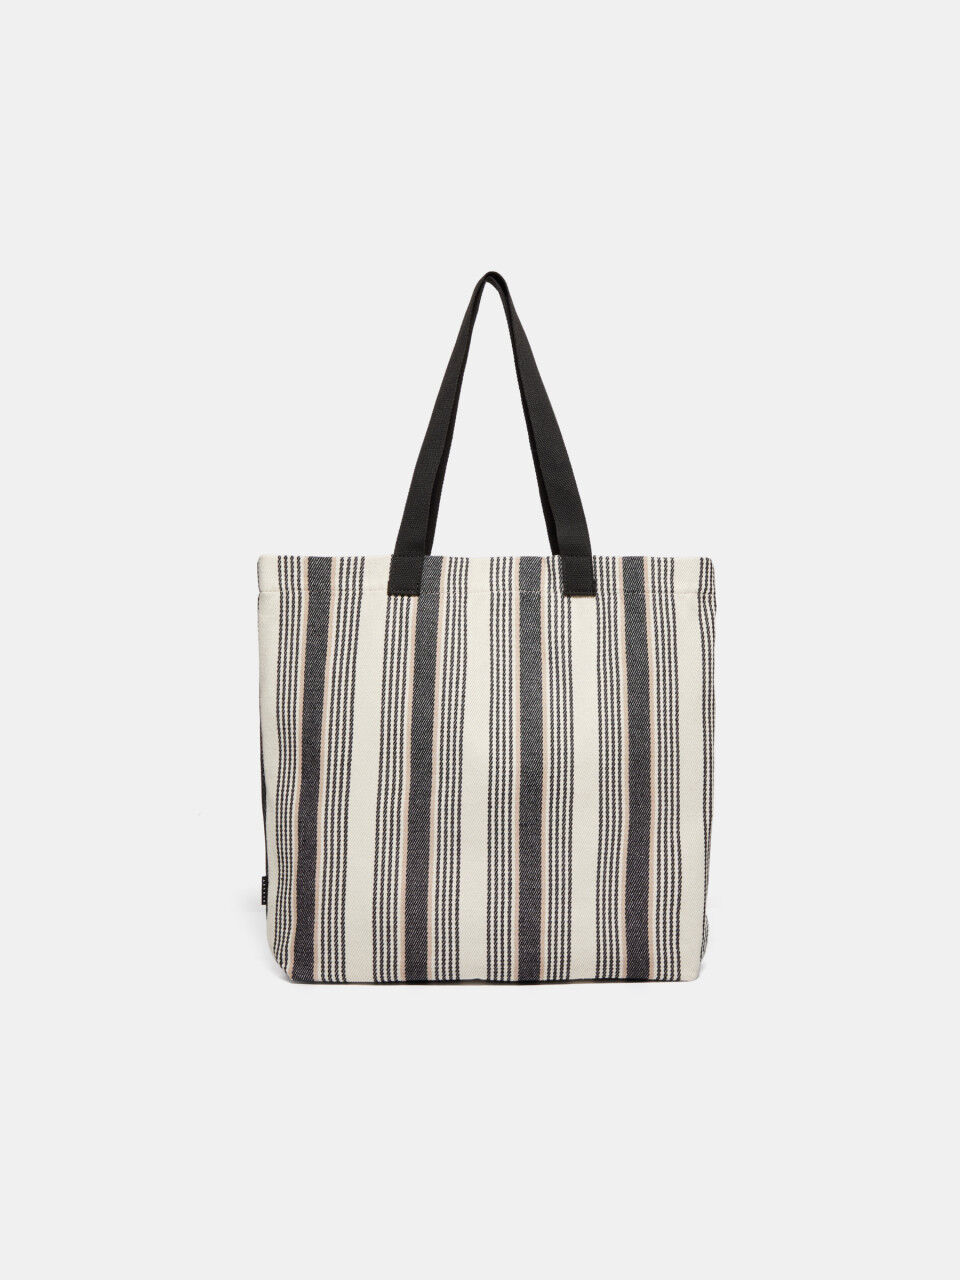 Striped tote bag